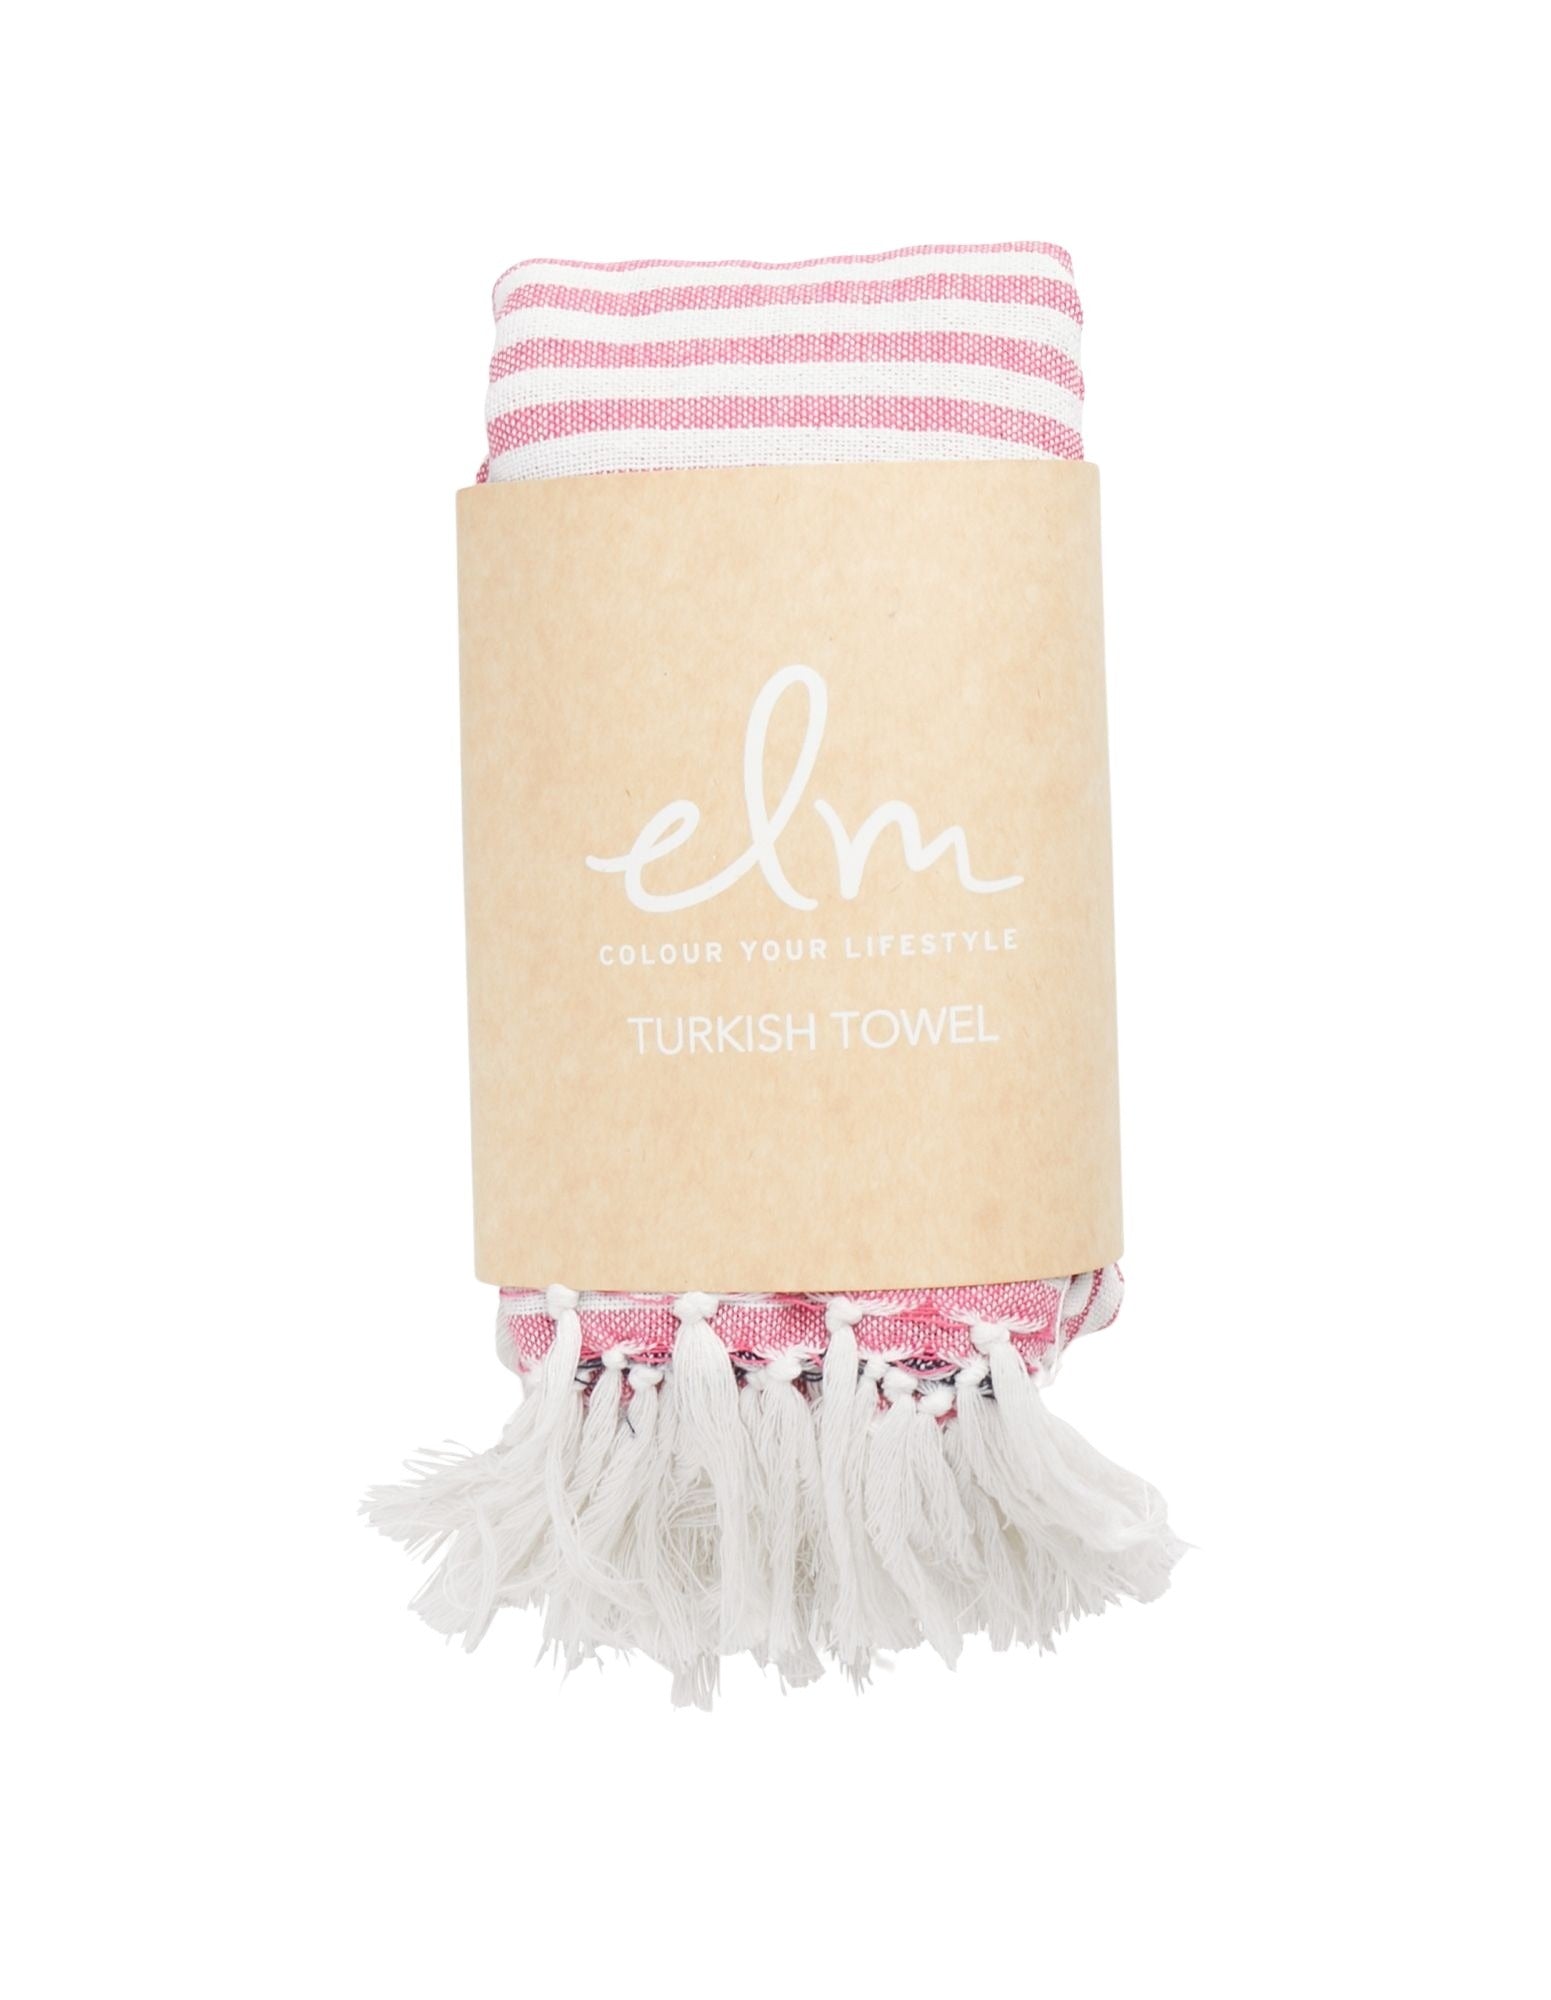 Elm - Turkish Towel - Navy / Pink Stripe